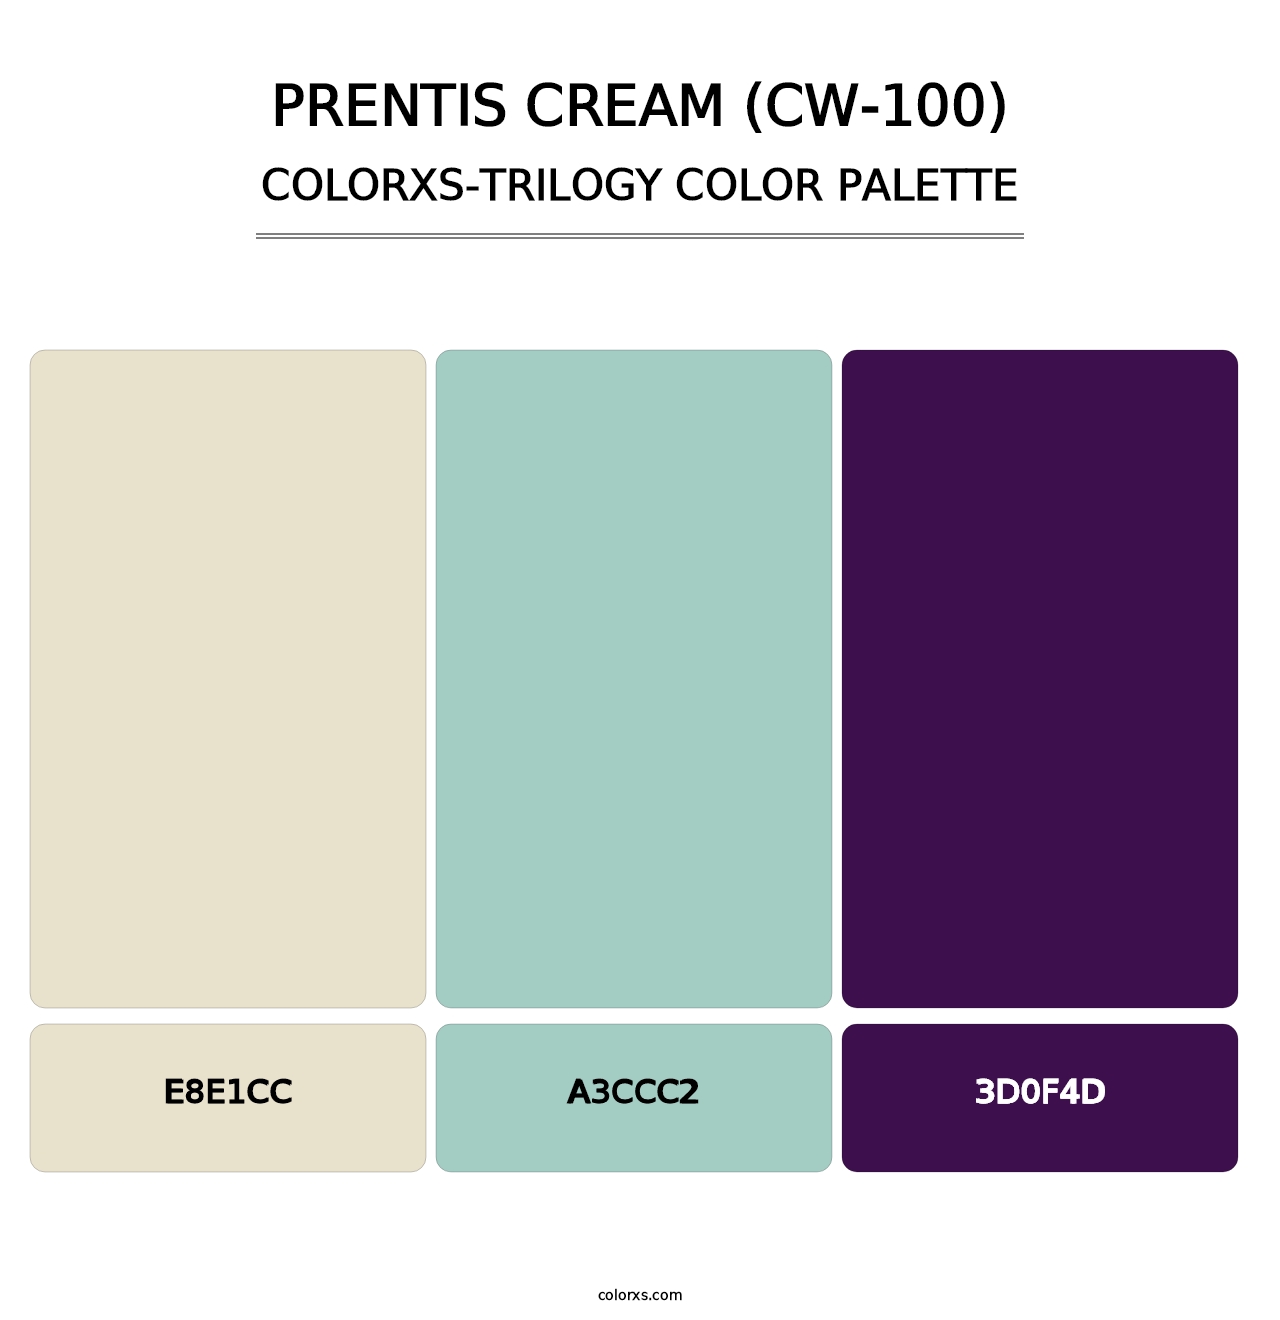 Prentis Cream (CW-100) - Colorxs Trilogy Palette